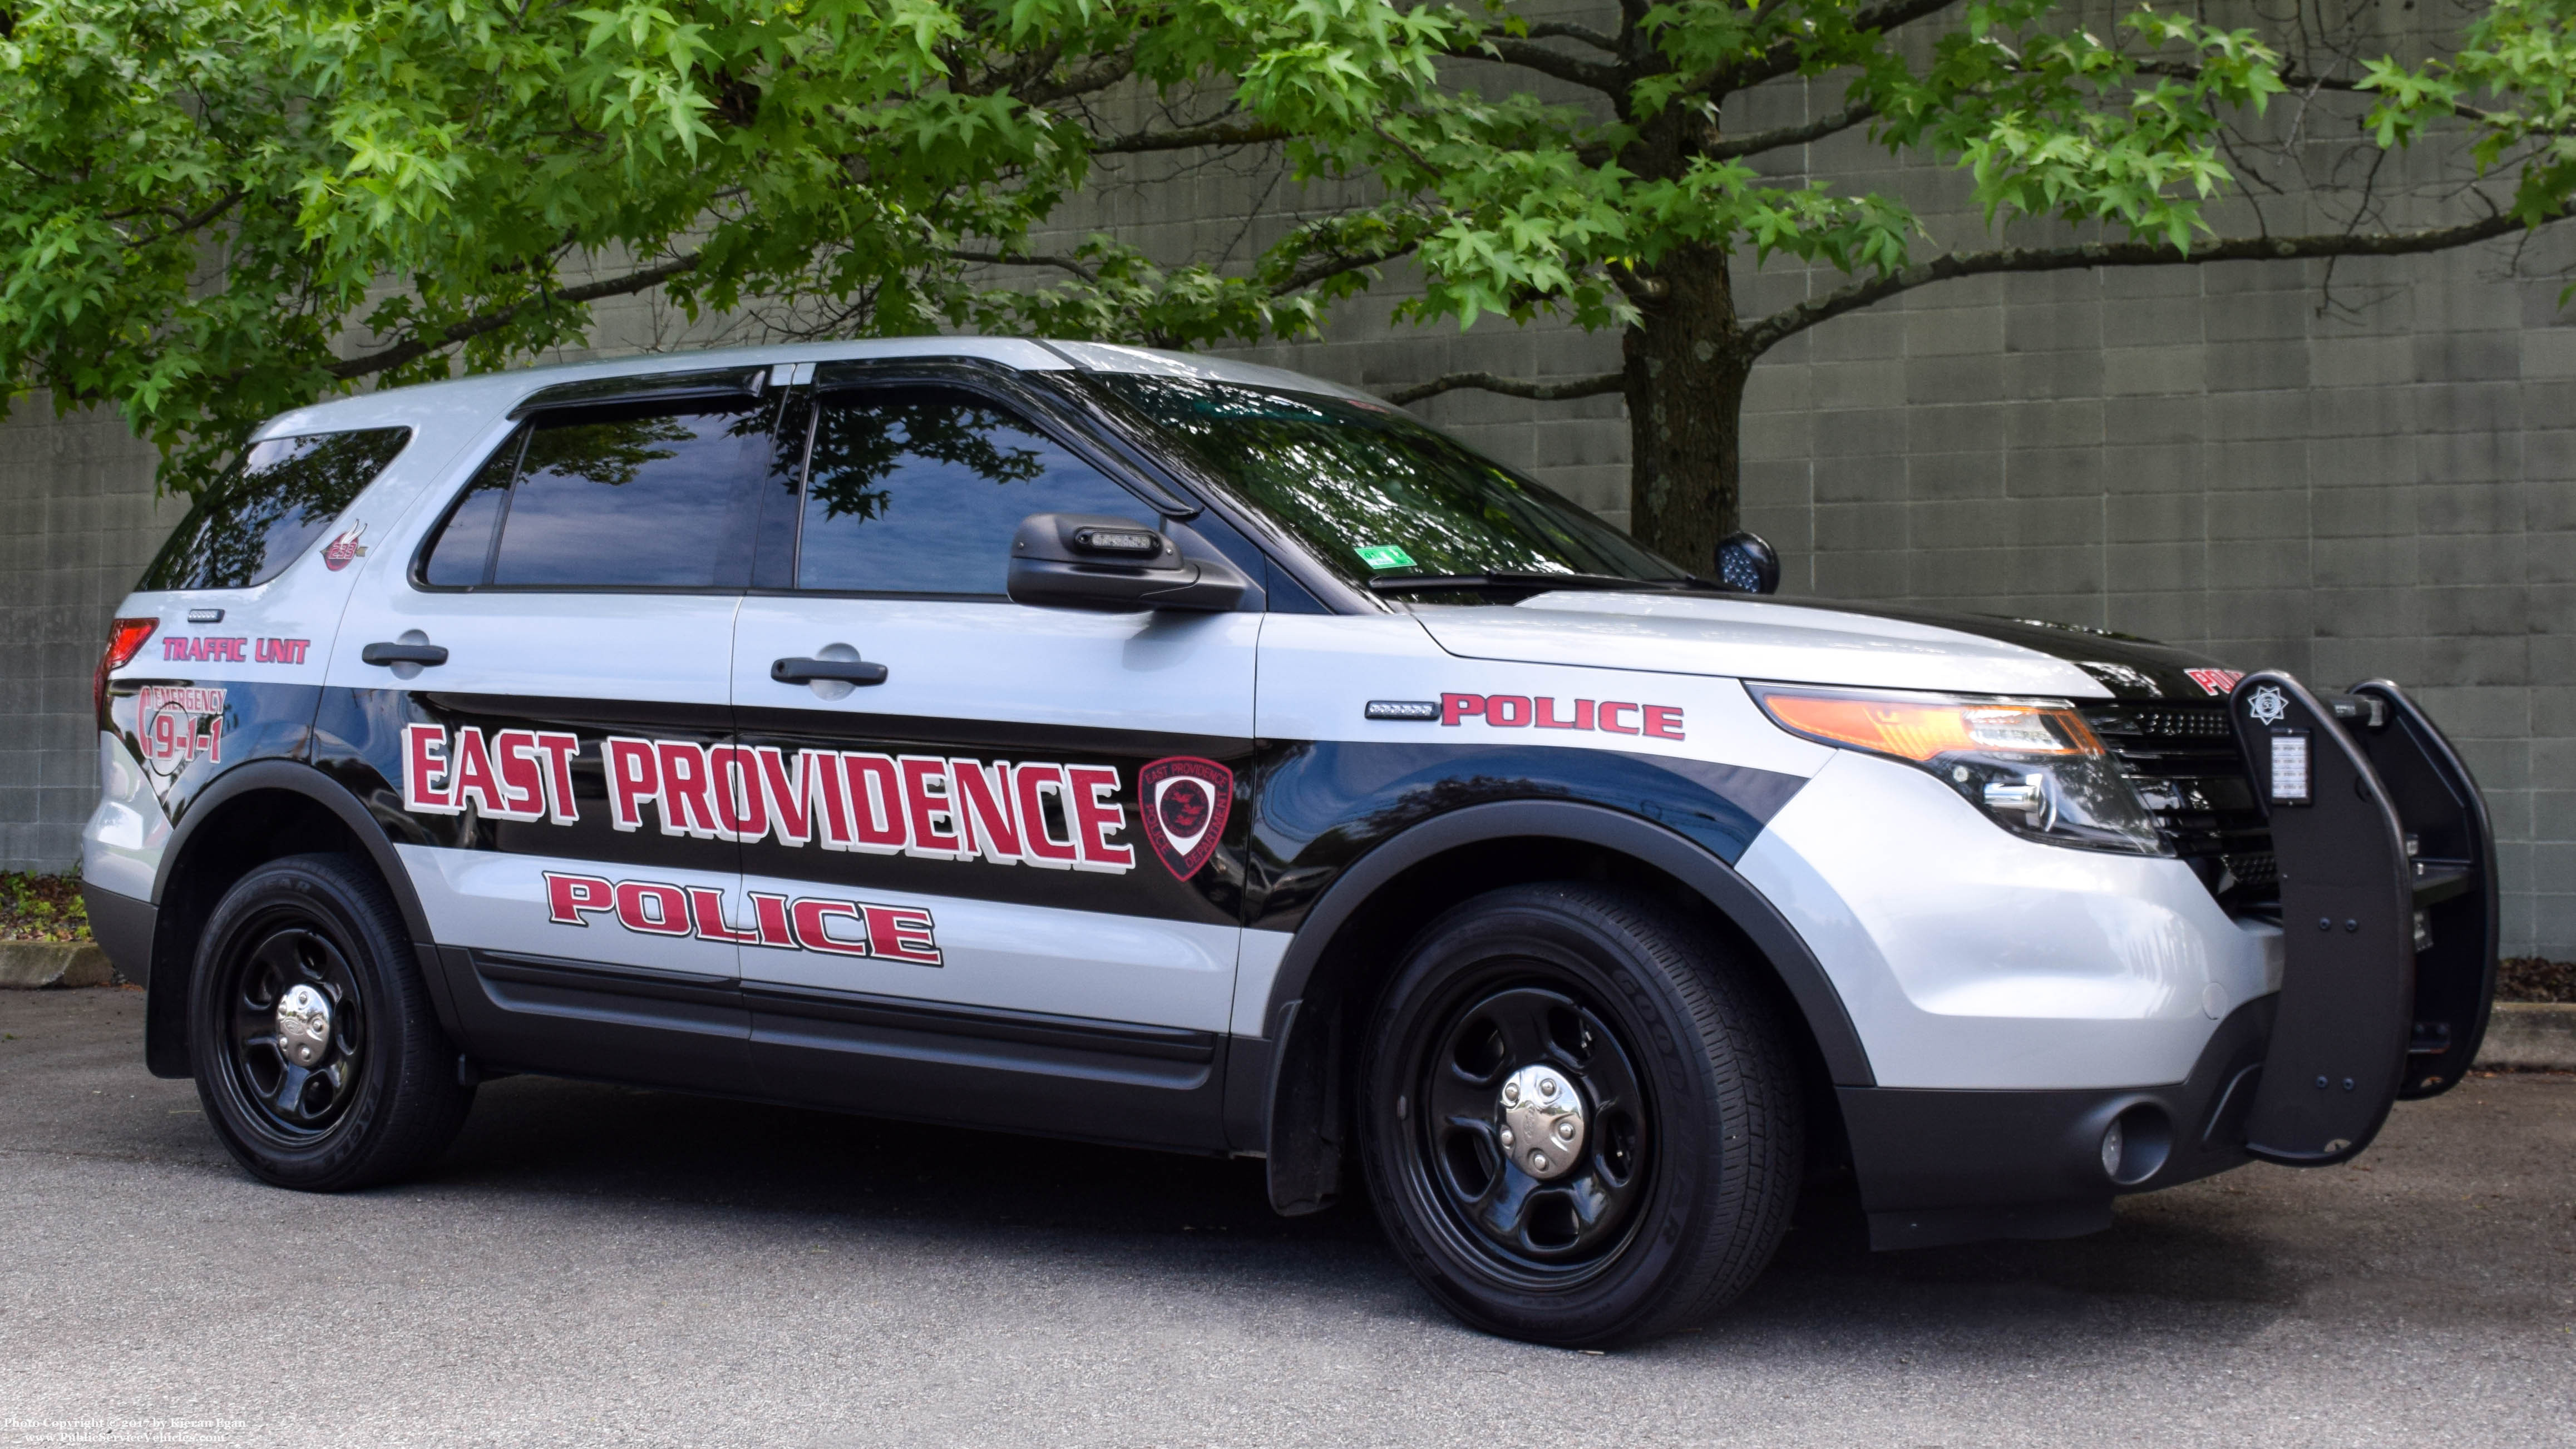 A photo  of East Providence Police
            Car [2]33, a 2014 Ford Police Interceptor Utility             taken by Kieran Egan